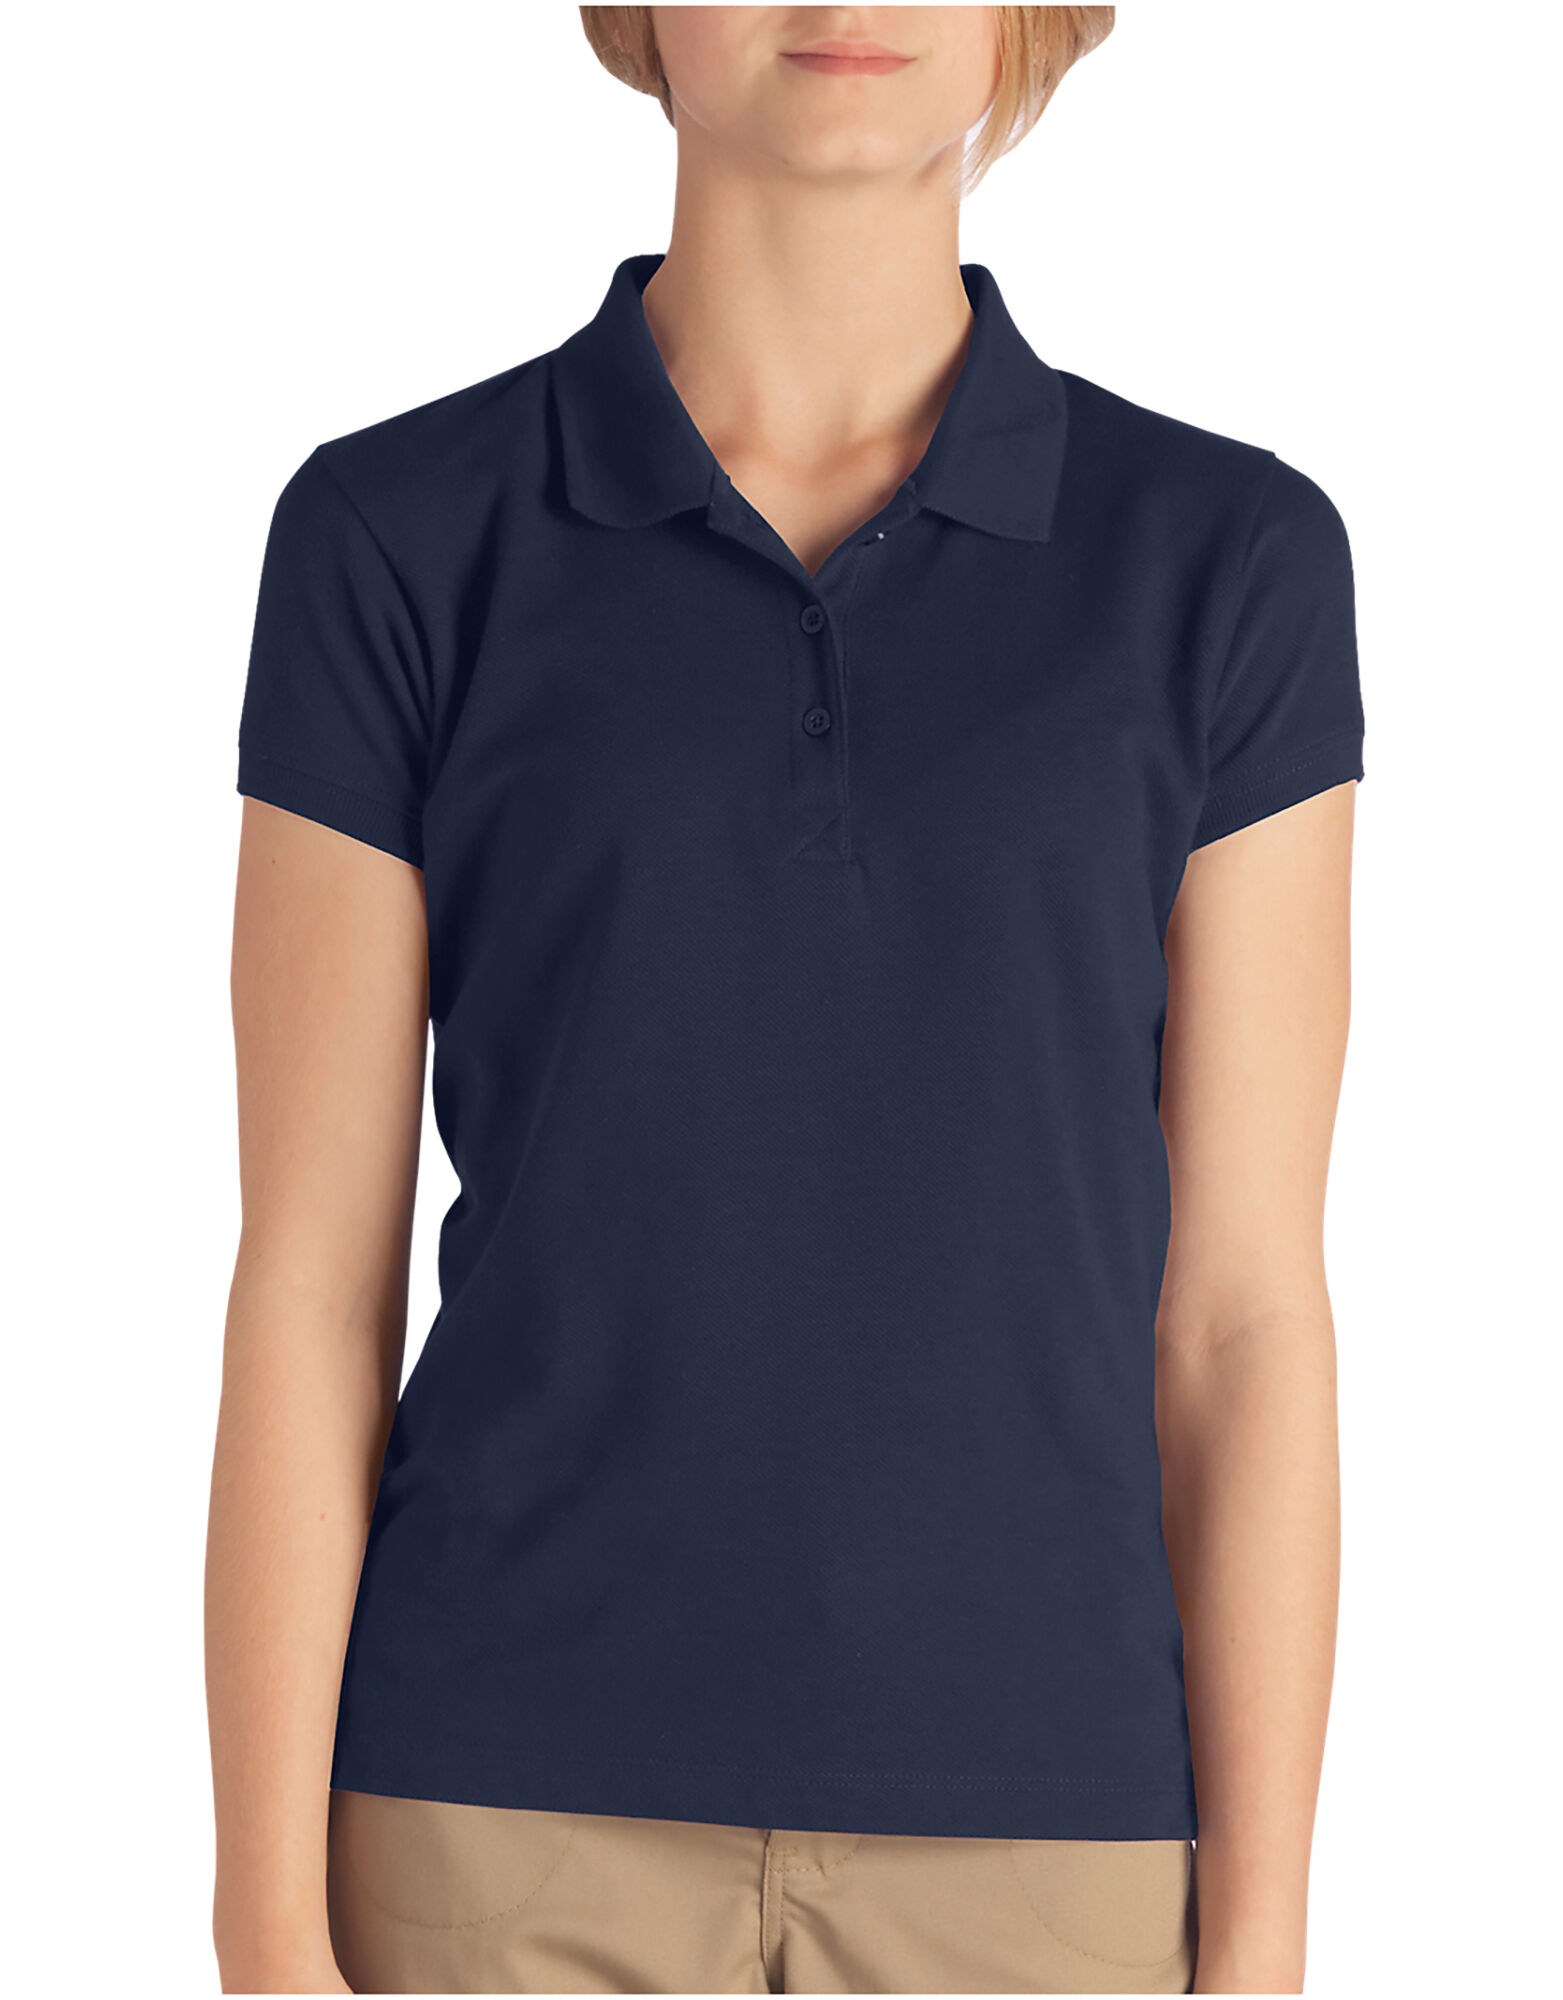 ladies navy blue polo shirts